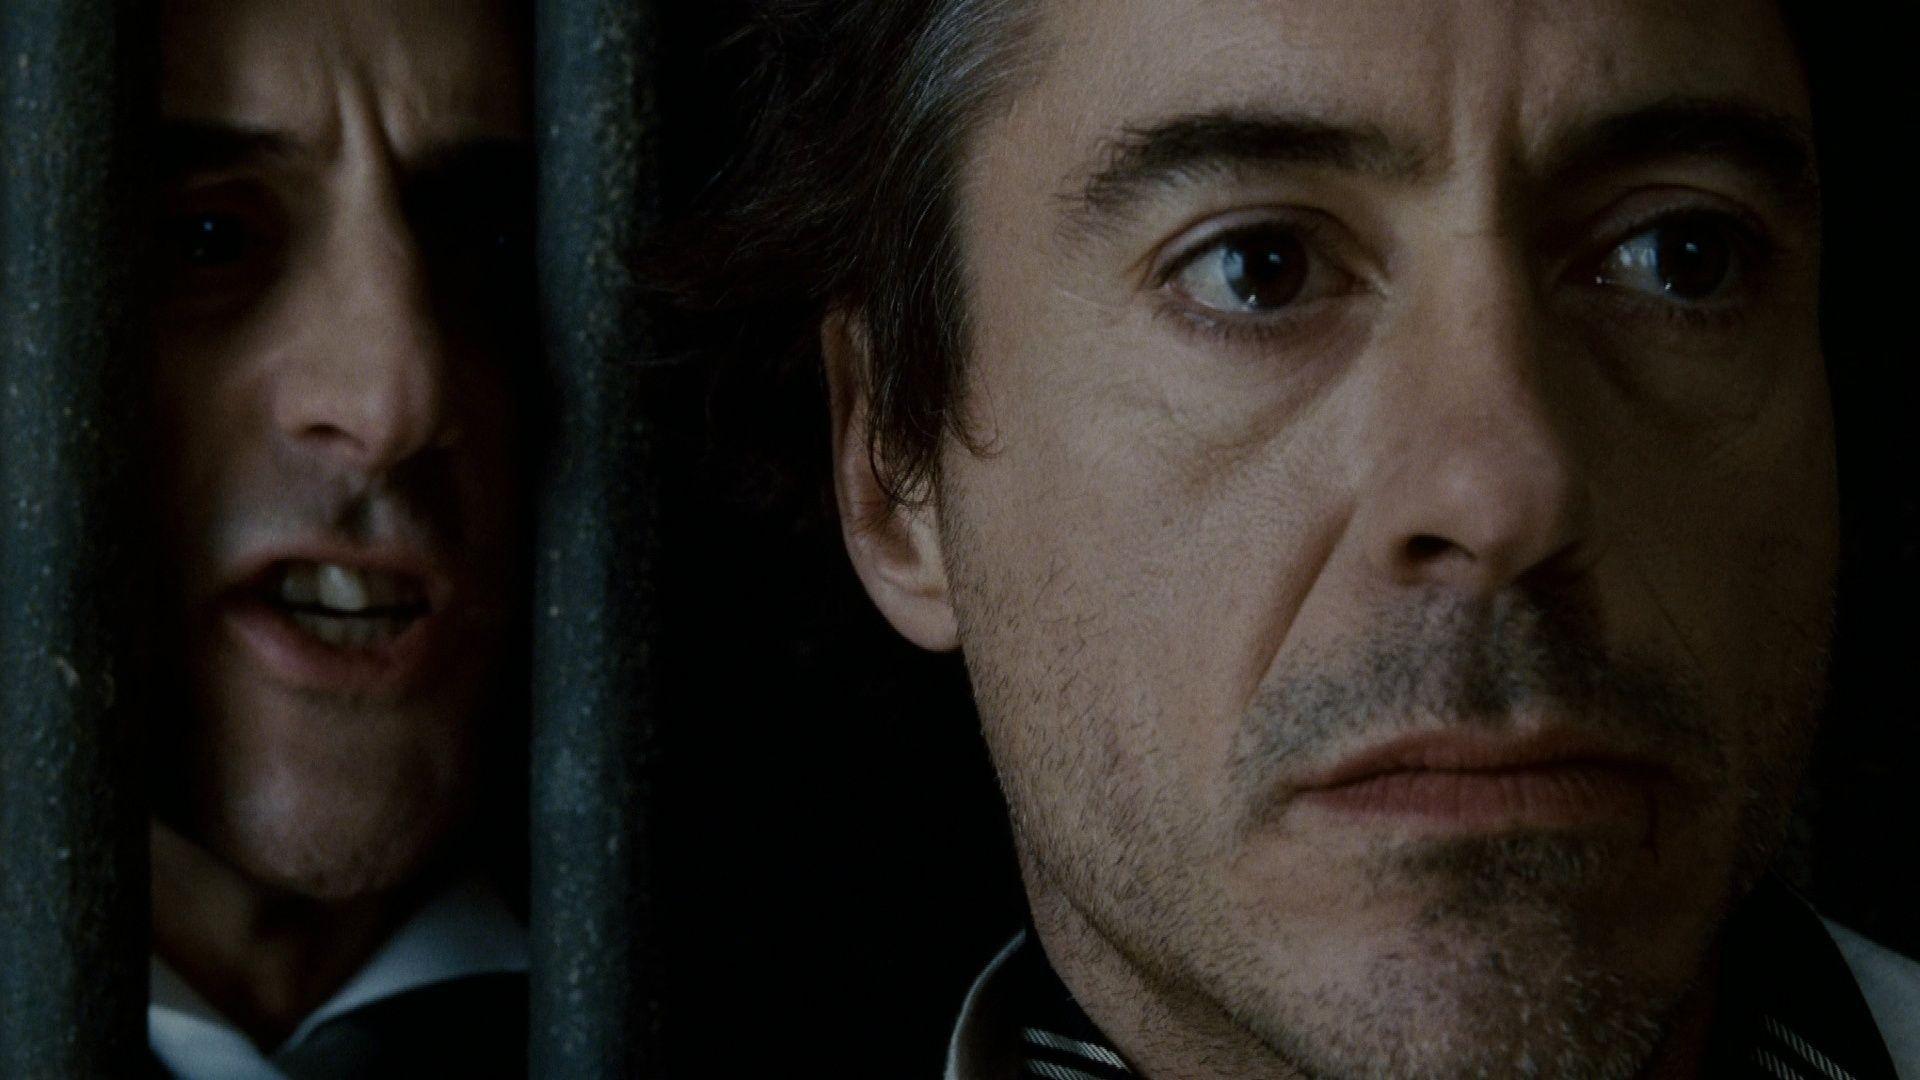 Round 1: Robert Downey Jr. as Sherlock Holmes in "Sherlock Holmes